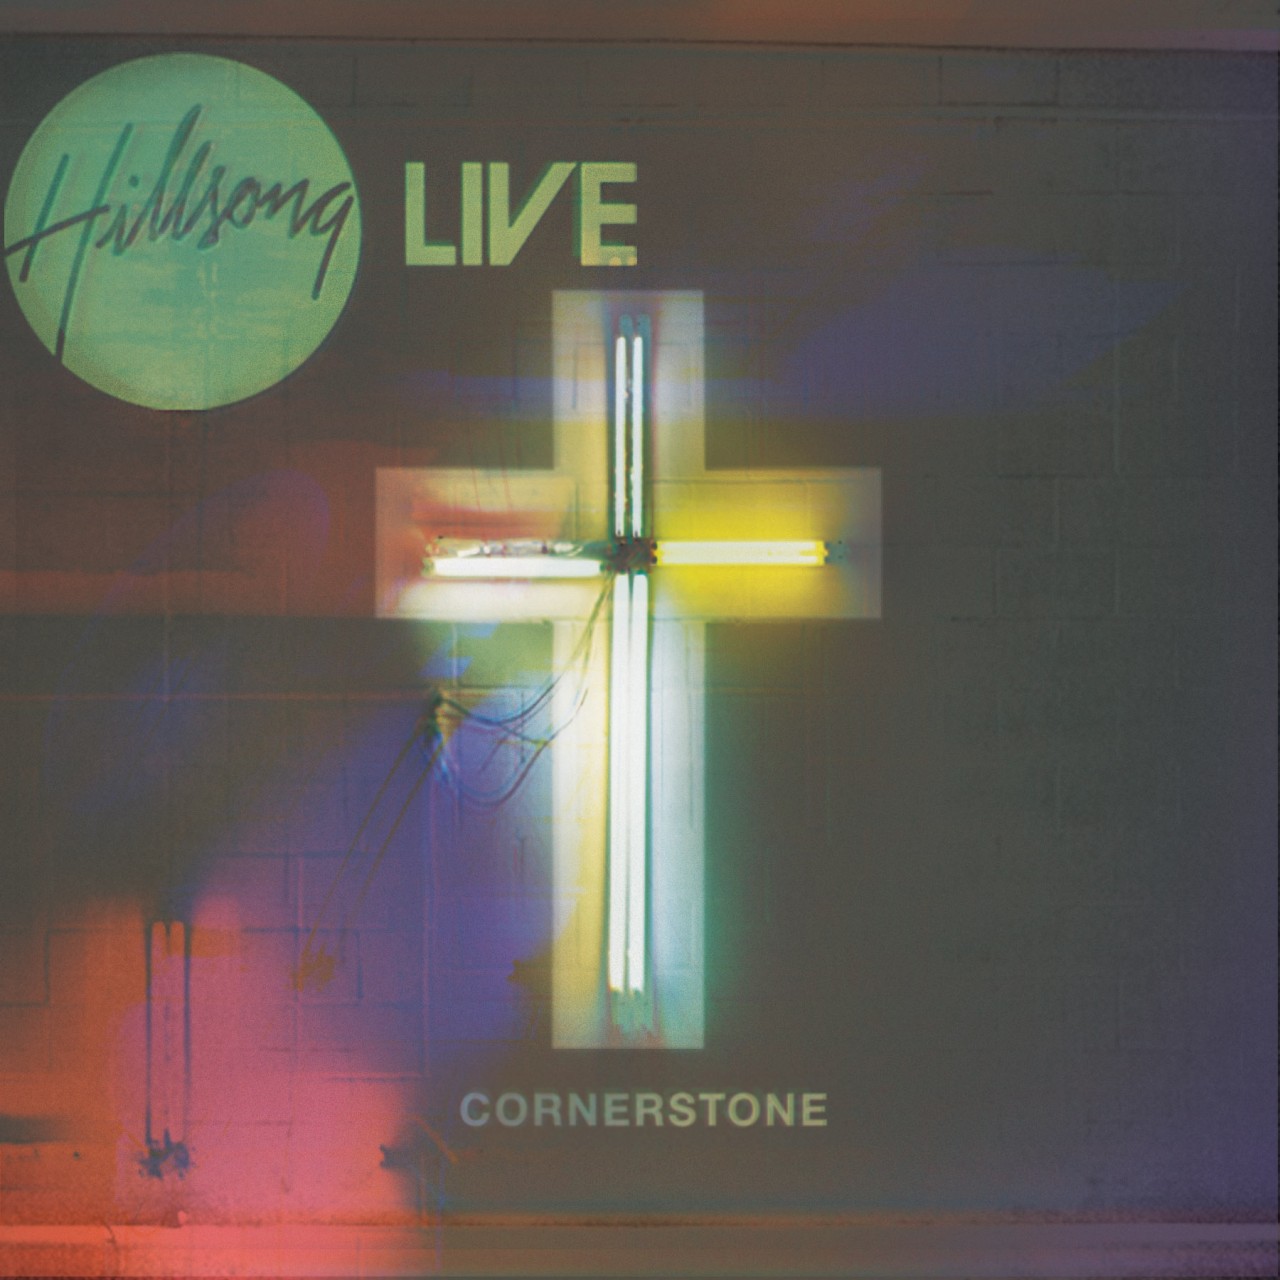 Hillsong Live Cornerstone 2012 320kpbs MP3 17900M